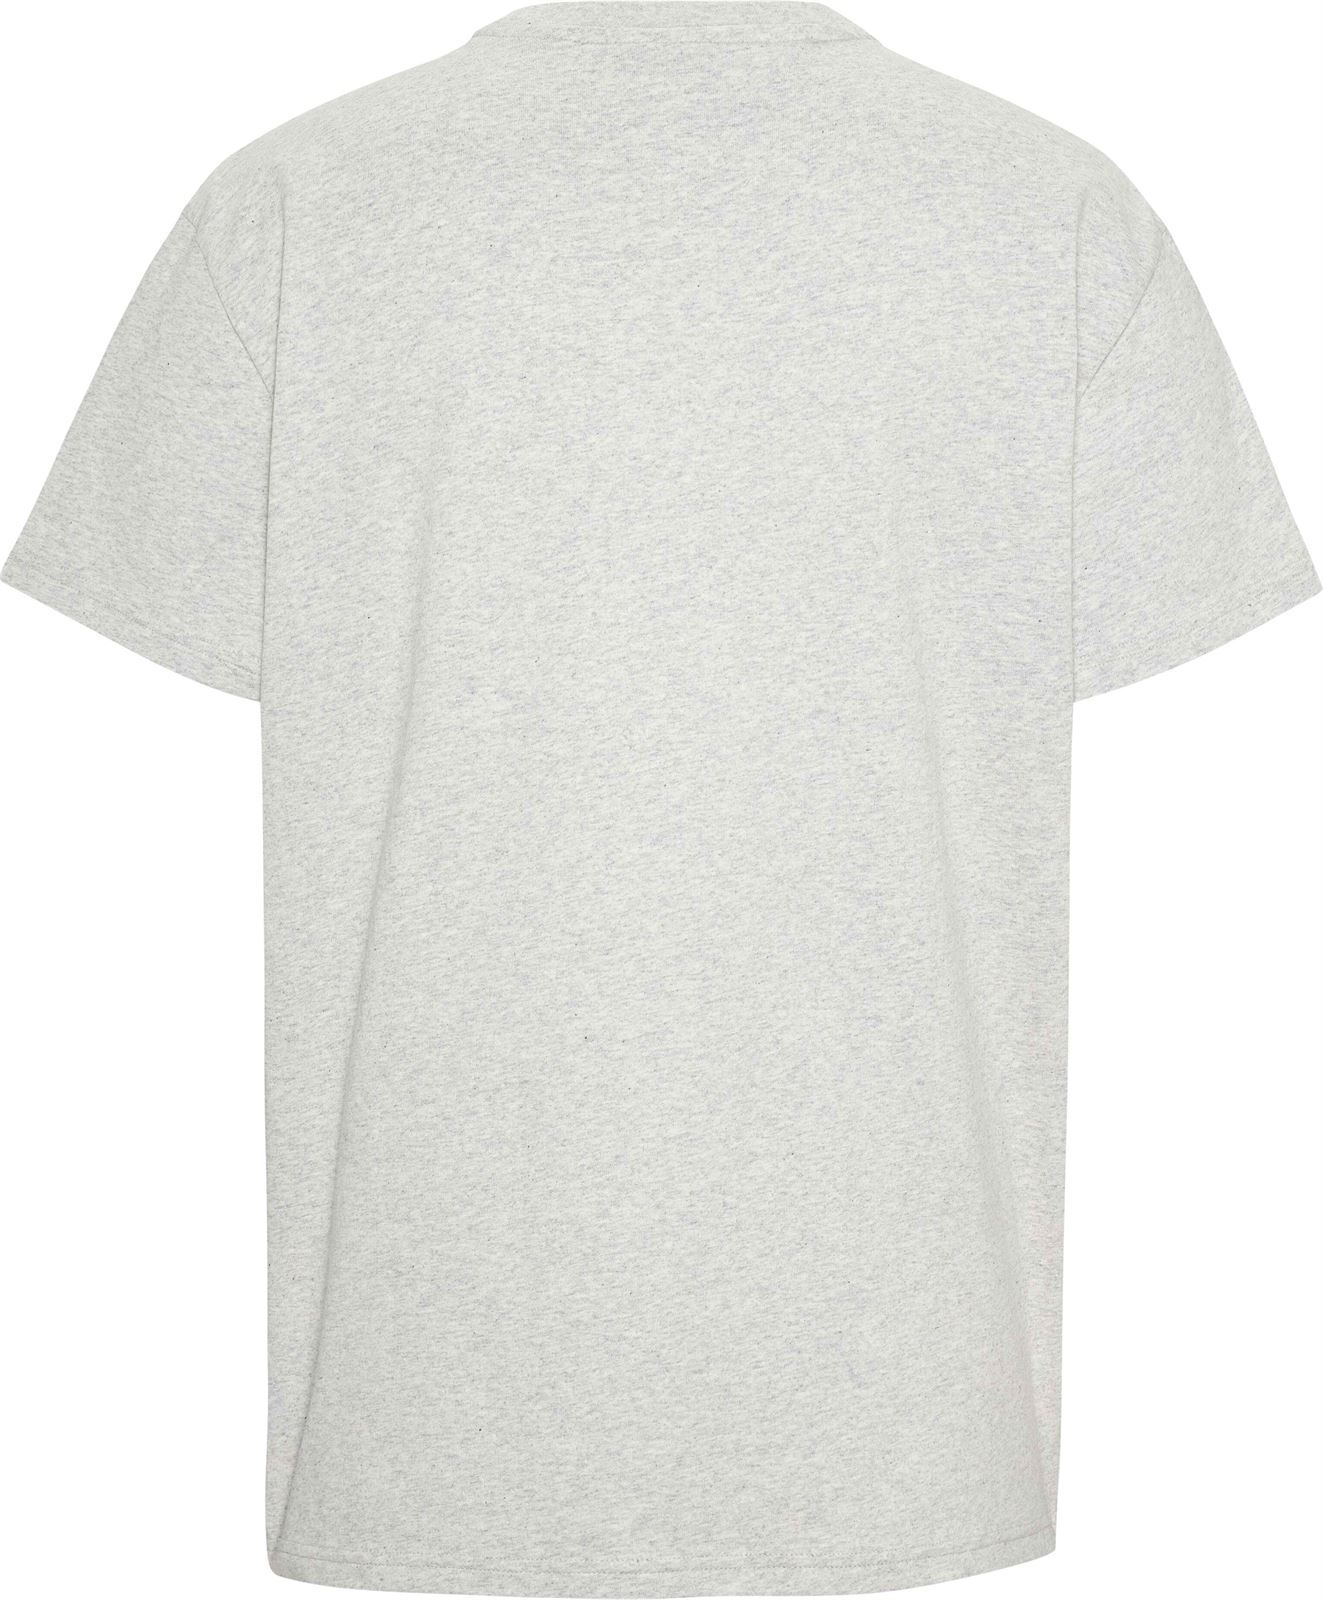 Camiseta TOMMY JEANS DM0DM16846 PJ4 silver grey heather - Imagen 3